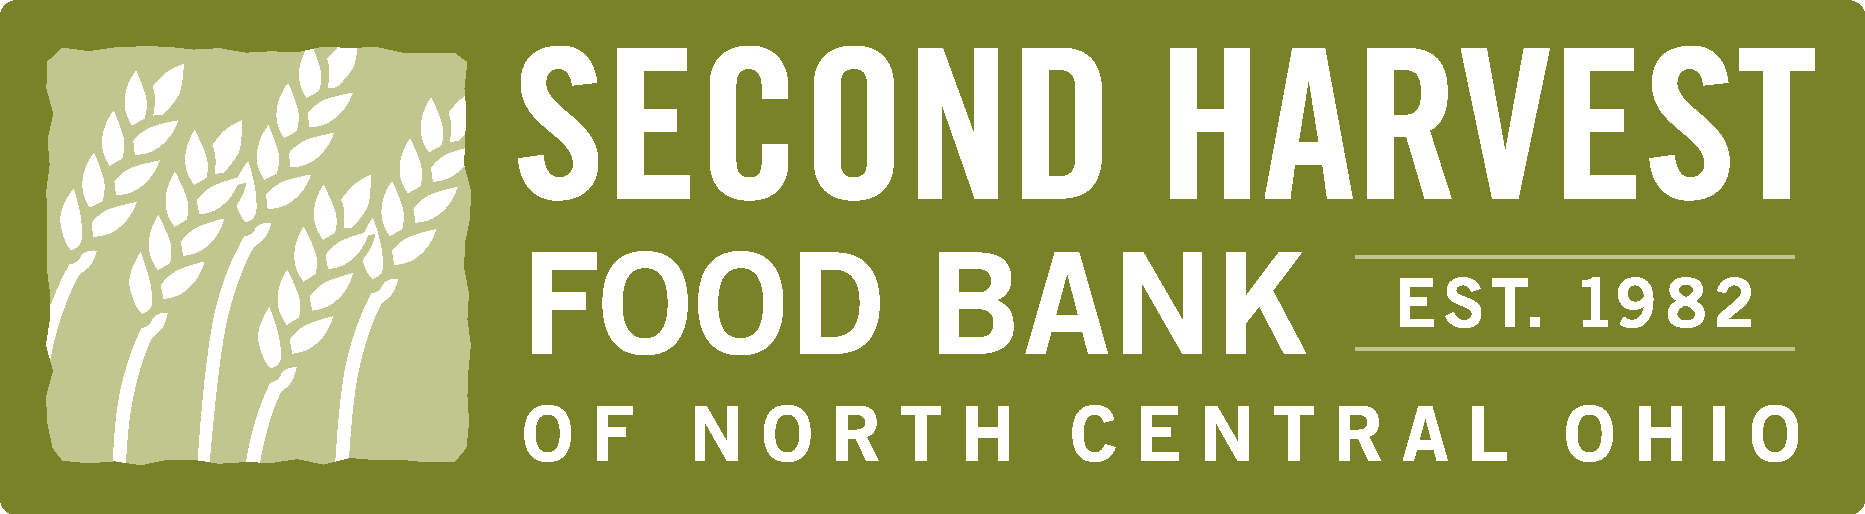 Second Harvest Food Bank Logo Vector